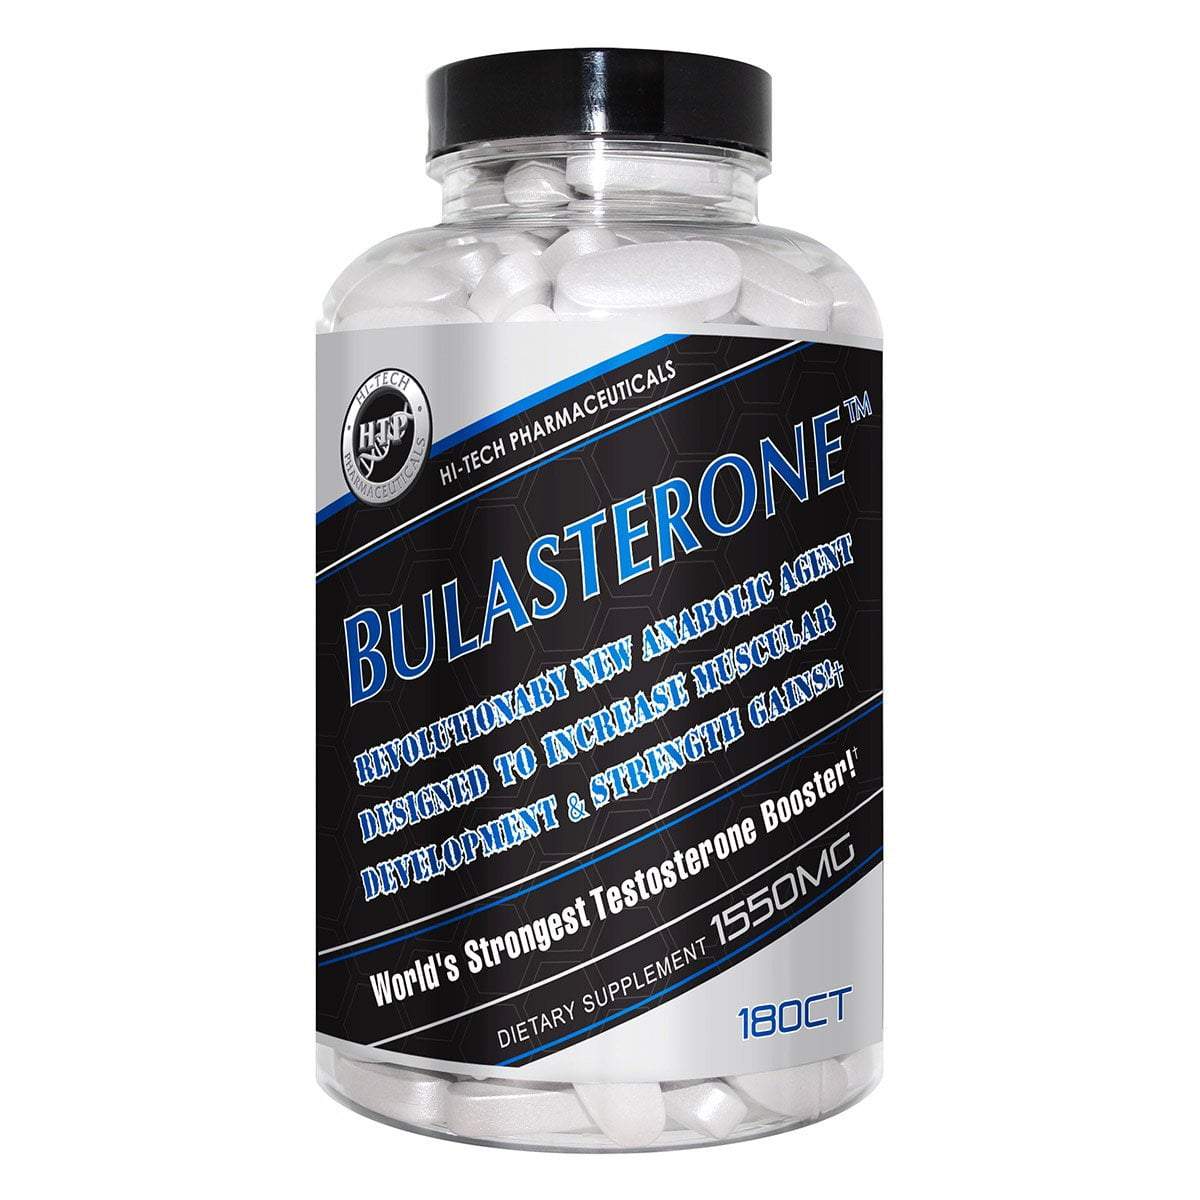 Hi-Tech Pharmaceuticals  Bulasterone 180 шт. / 30 servings,  ml, Hi-Tech Pharmaceuticals. Testosterone Booster. General Health Libido enhancing Anabolic properties Testosterone enhancement 